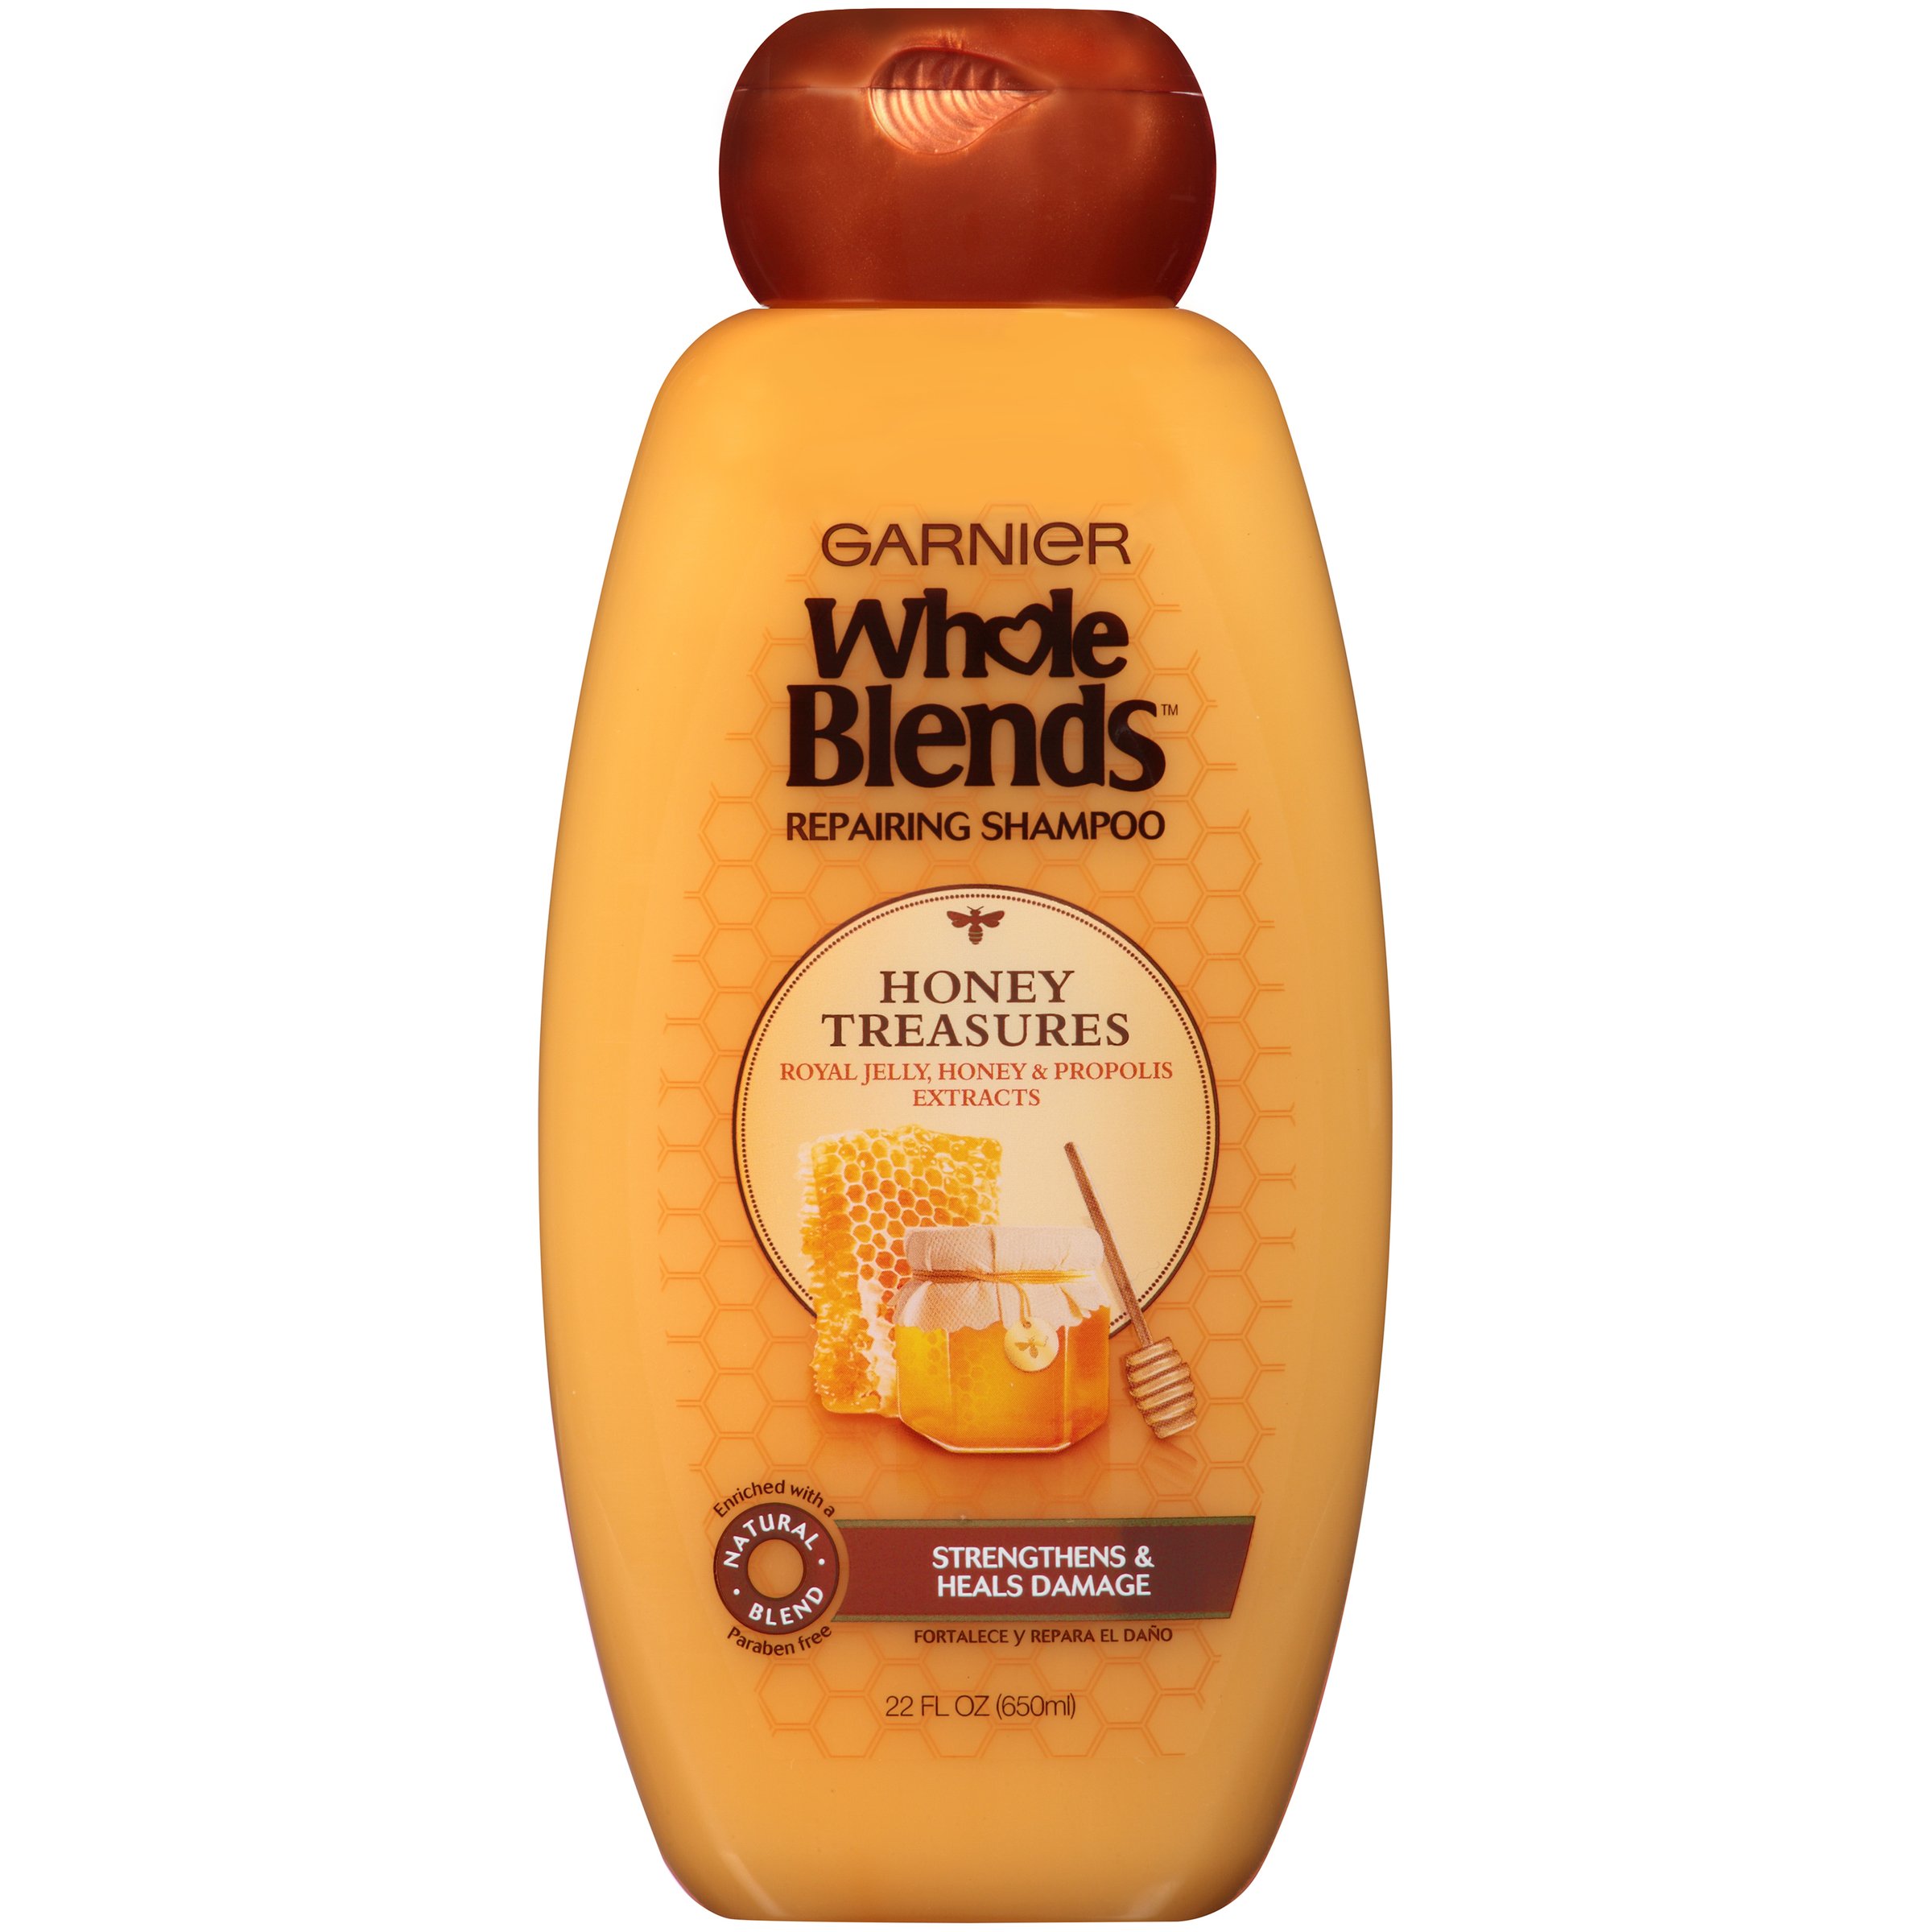 Whole Blends Honey Treasures Shampoo, For Damaged Hair - Shop Shampoo & Conditioner at H-E-B